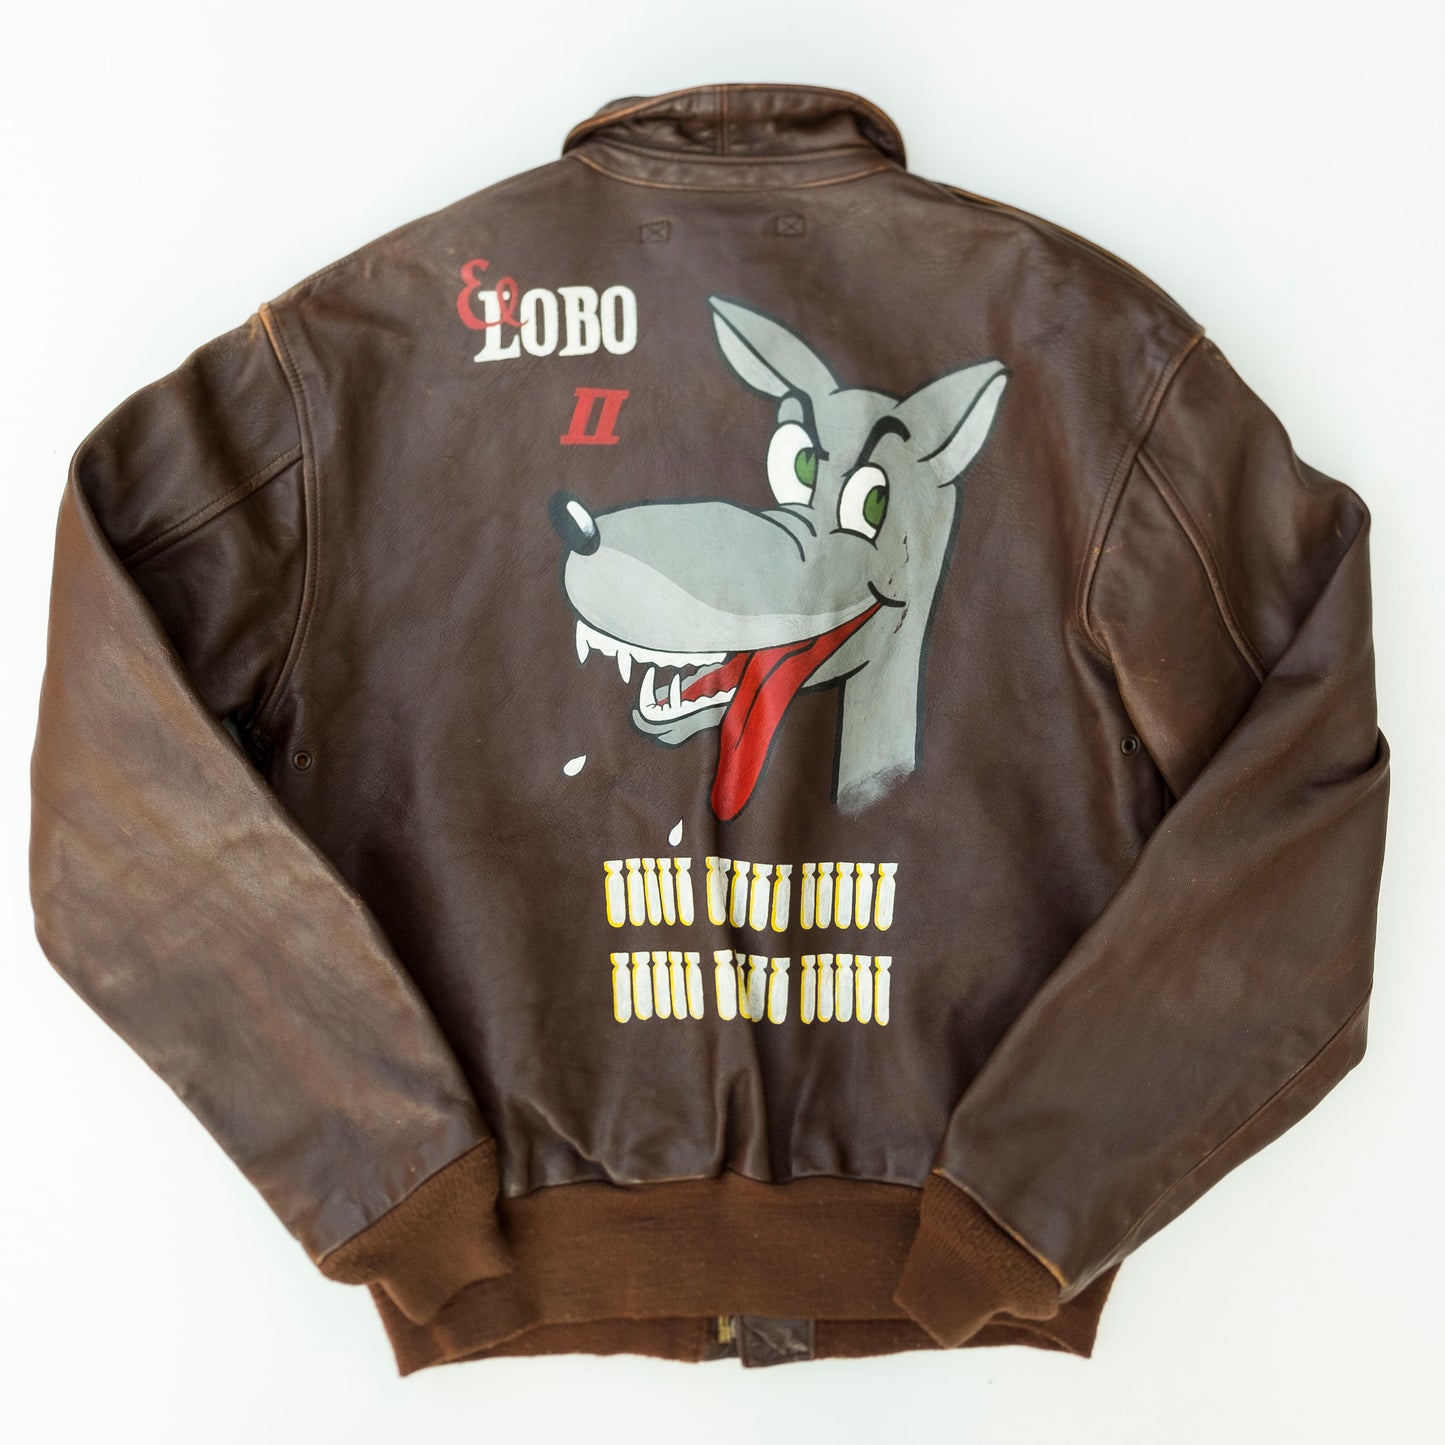 Vintage A-2 Handpainted Hand Paint Lobo Fox Military Flight Bomber Leather Jacket